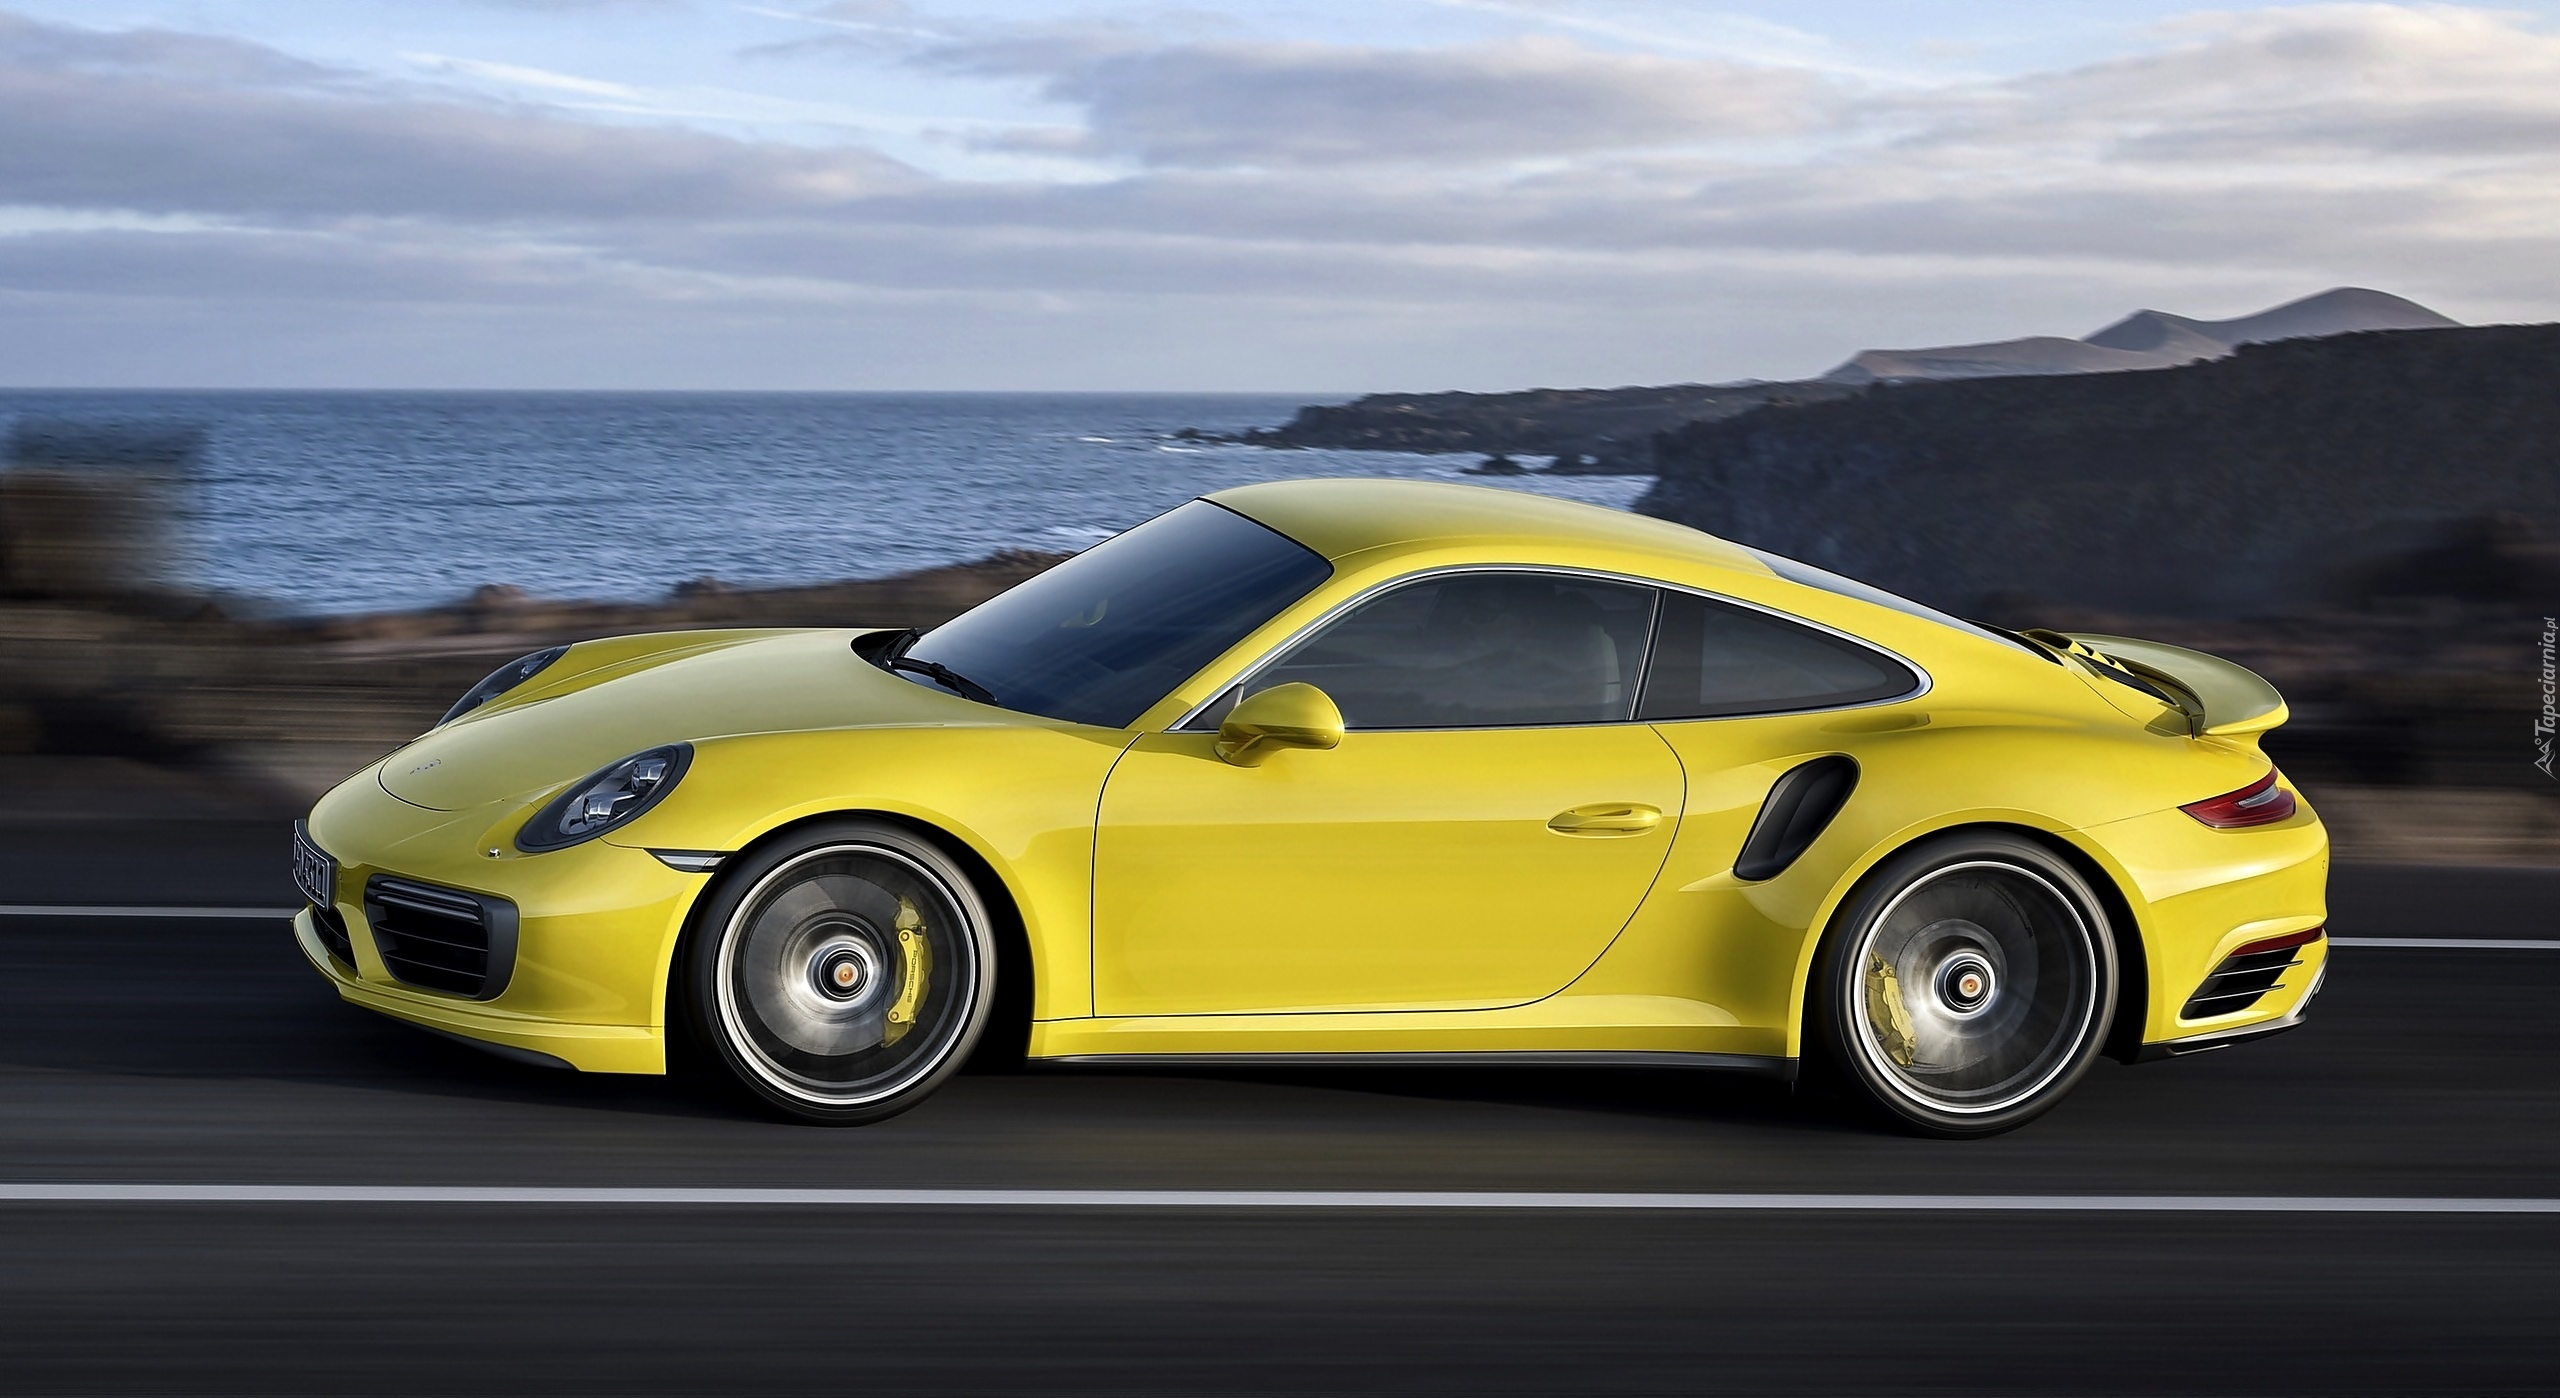 Żółte, Porsche, 911 Turbo, Droga, Jezioro